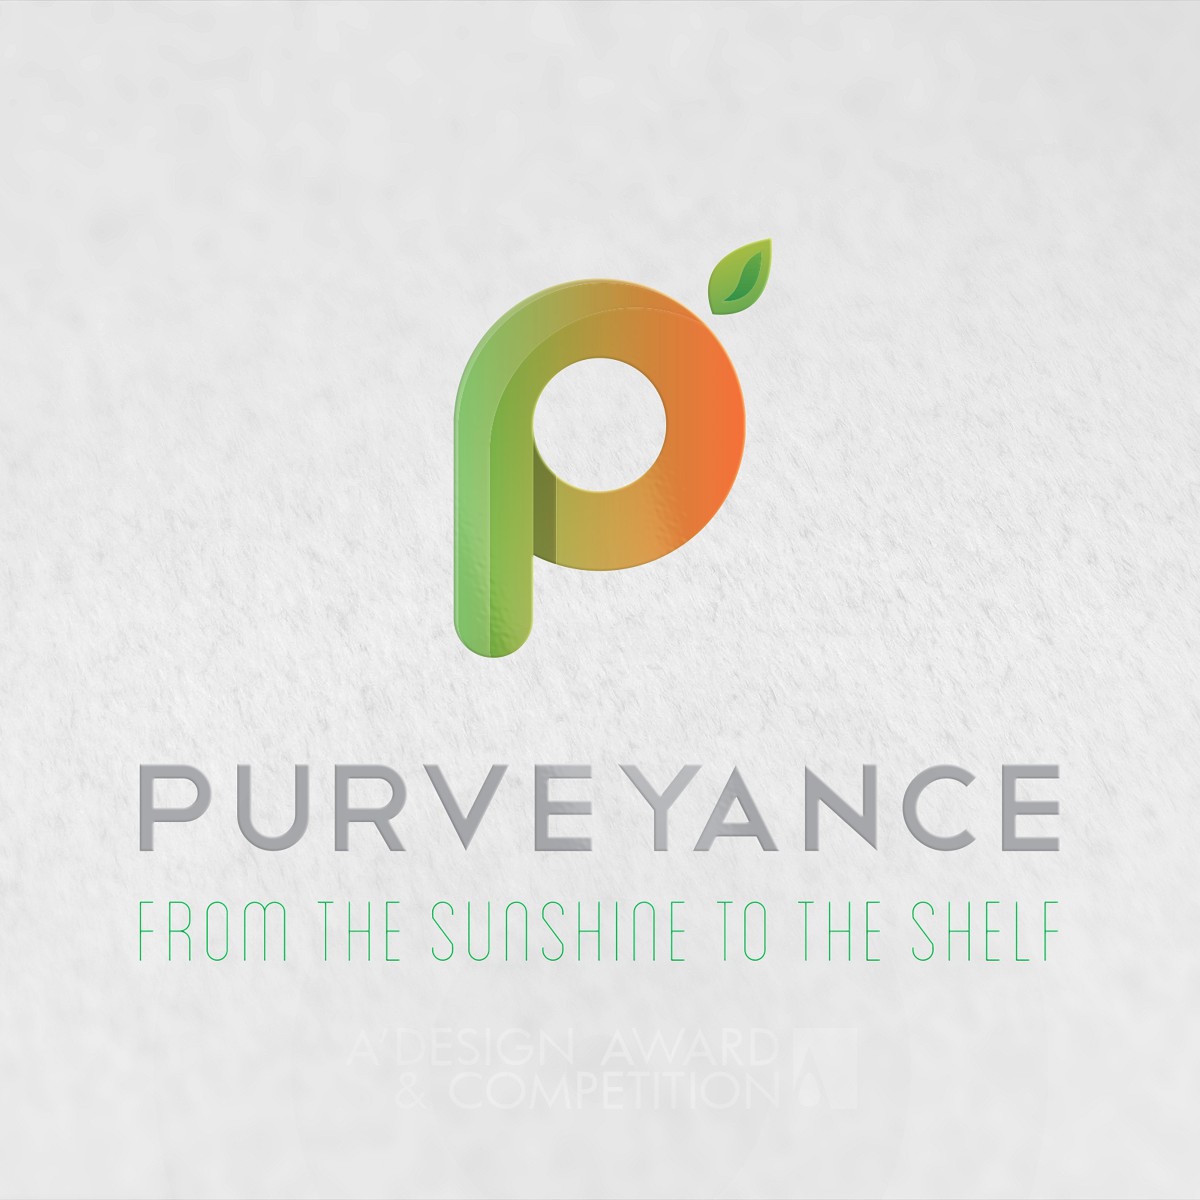 Purveyance Branding by Creative Media